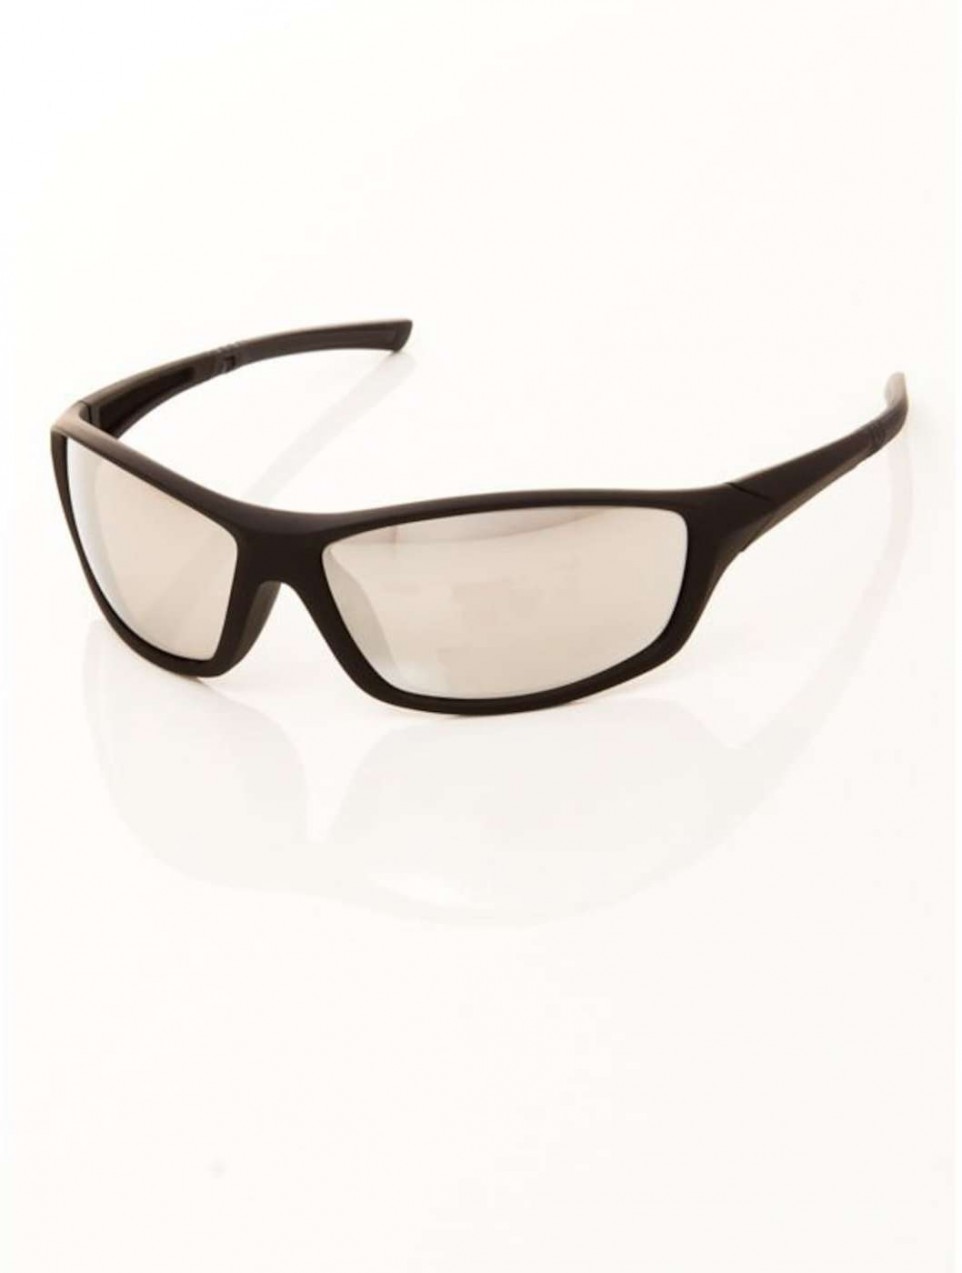 Glasses-LE-OK-JB7376-C-silver